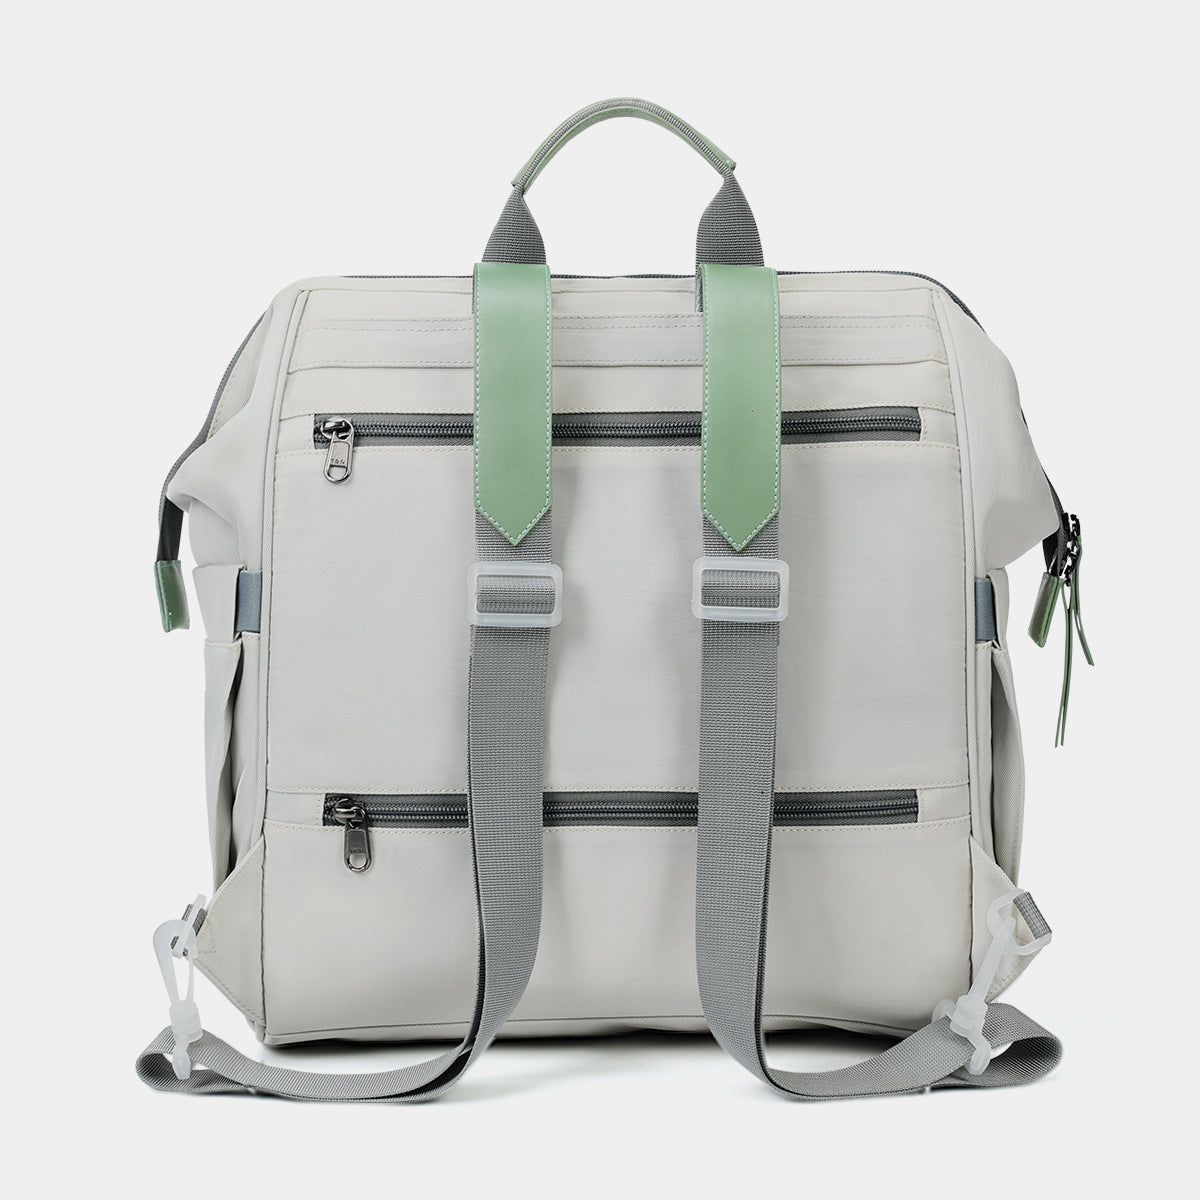 Tigernu T-B9513 Campus School Laptop Backpack Bag